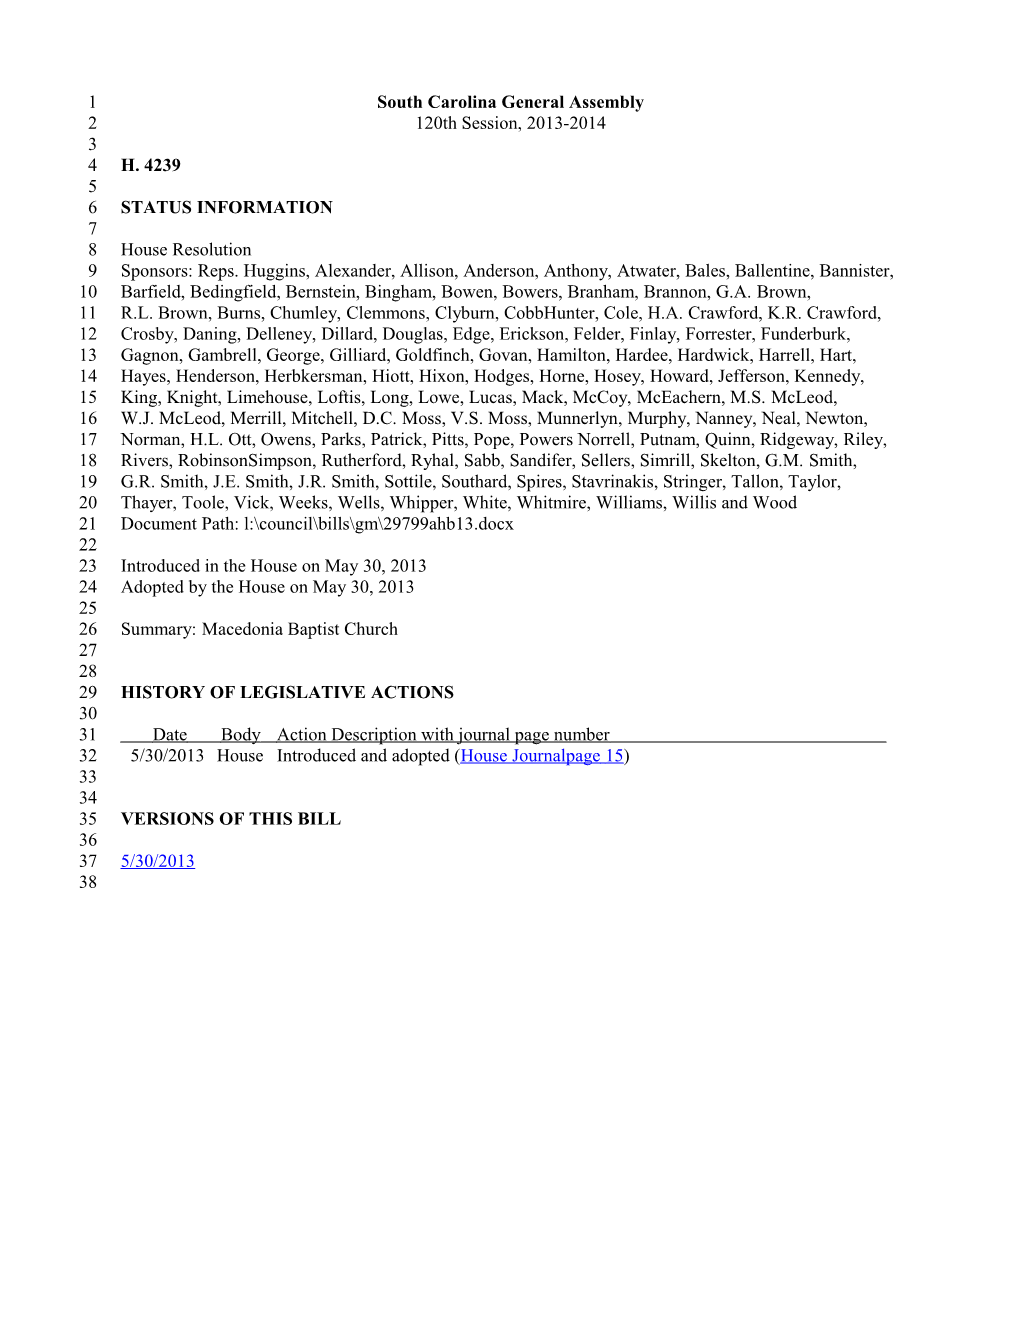 2013-2014 Bill 4239: Macedonia Baptist Church - South Carolina Legislature Online